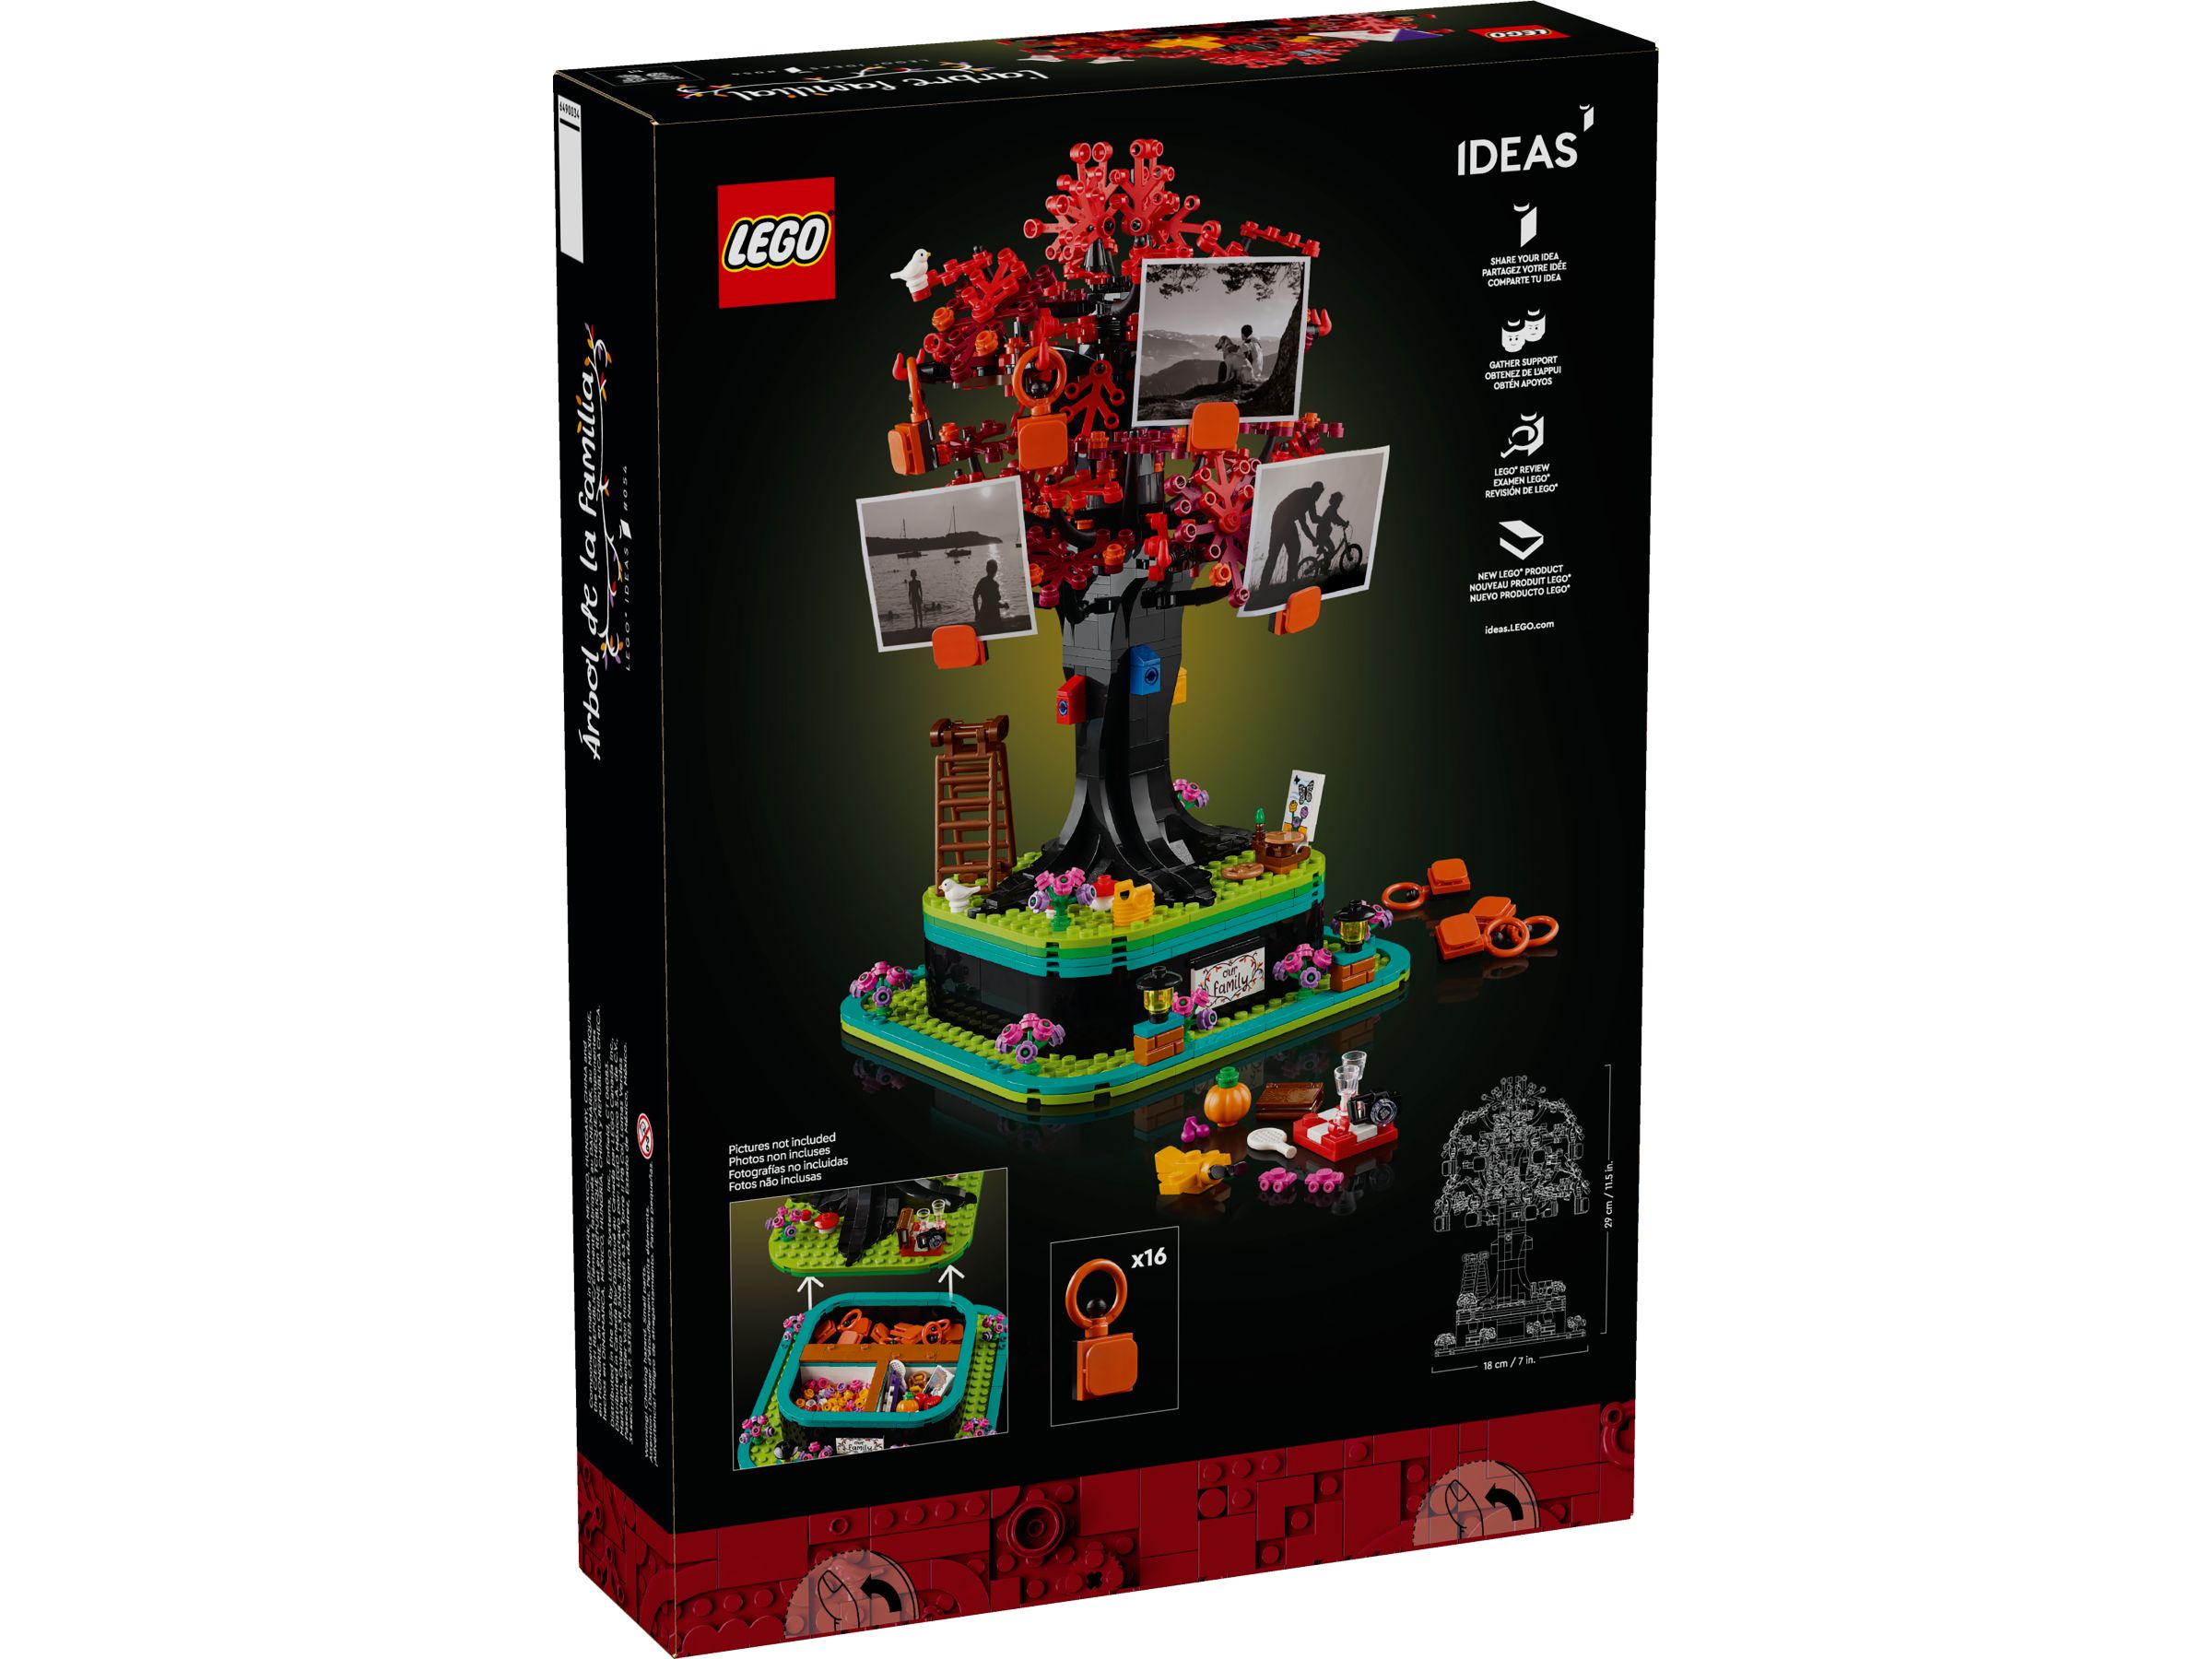 LEGO Ideas 21346 Familienbaum LEGO_21346_Box5_v39.jpg